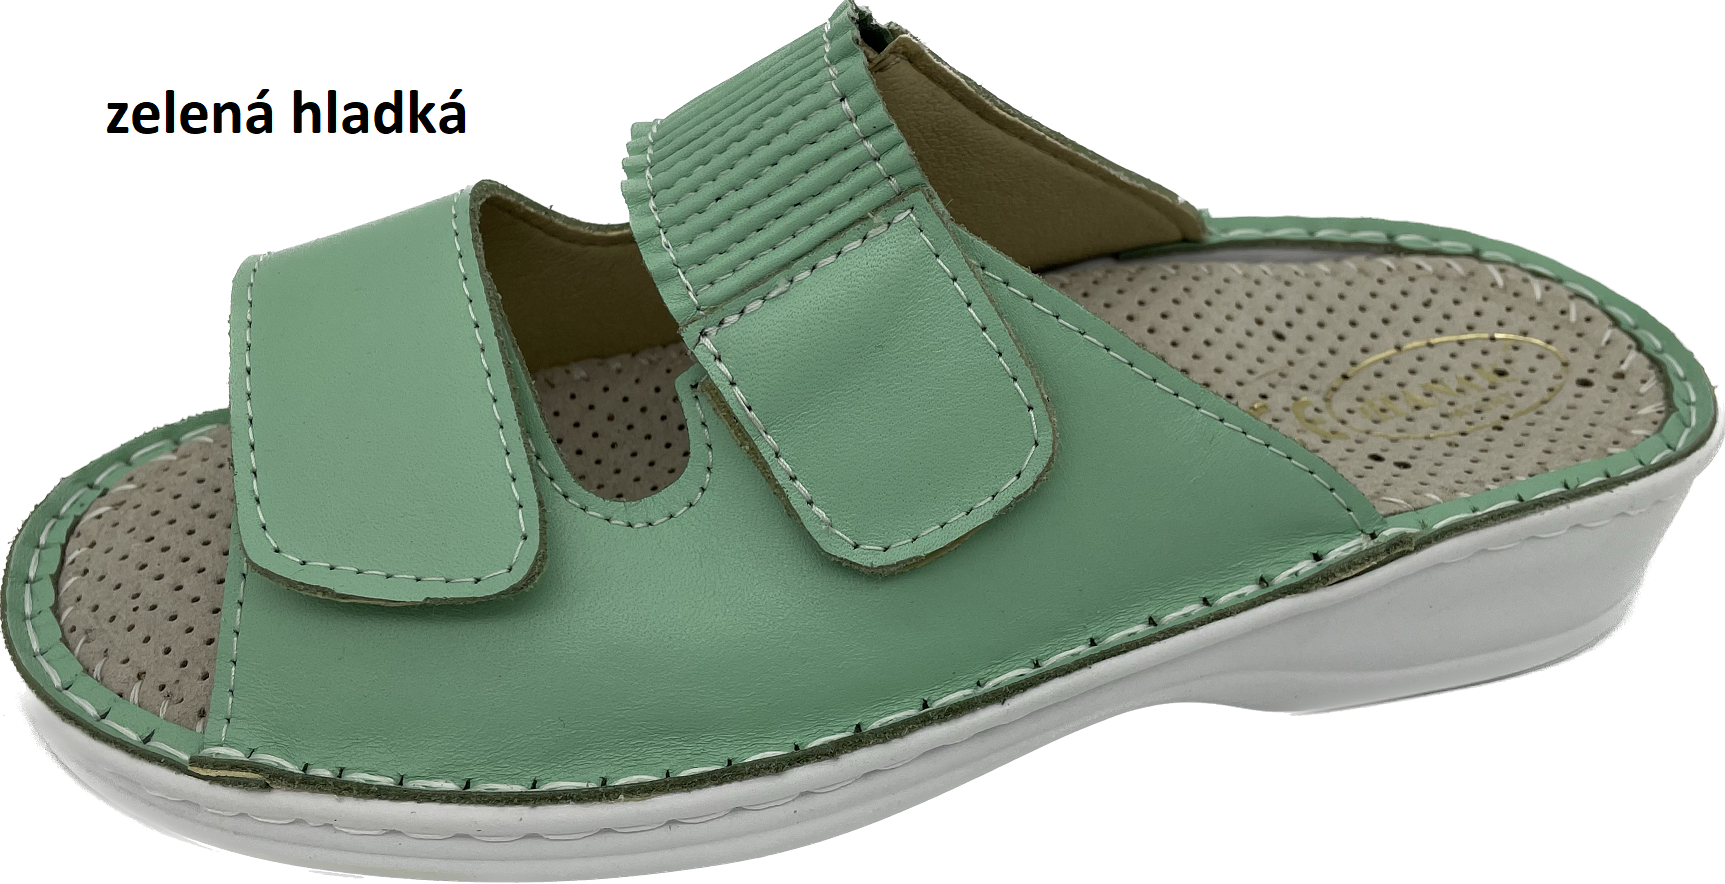 Boty Hanák vzor 304 - bílá podešev Barva usně: zelená hladká, Velikosti obuvi: 38